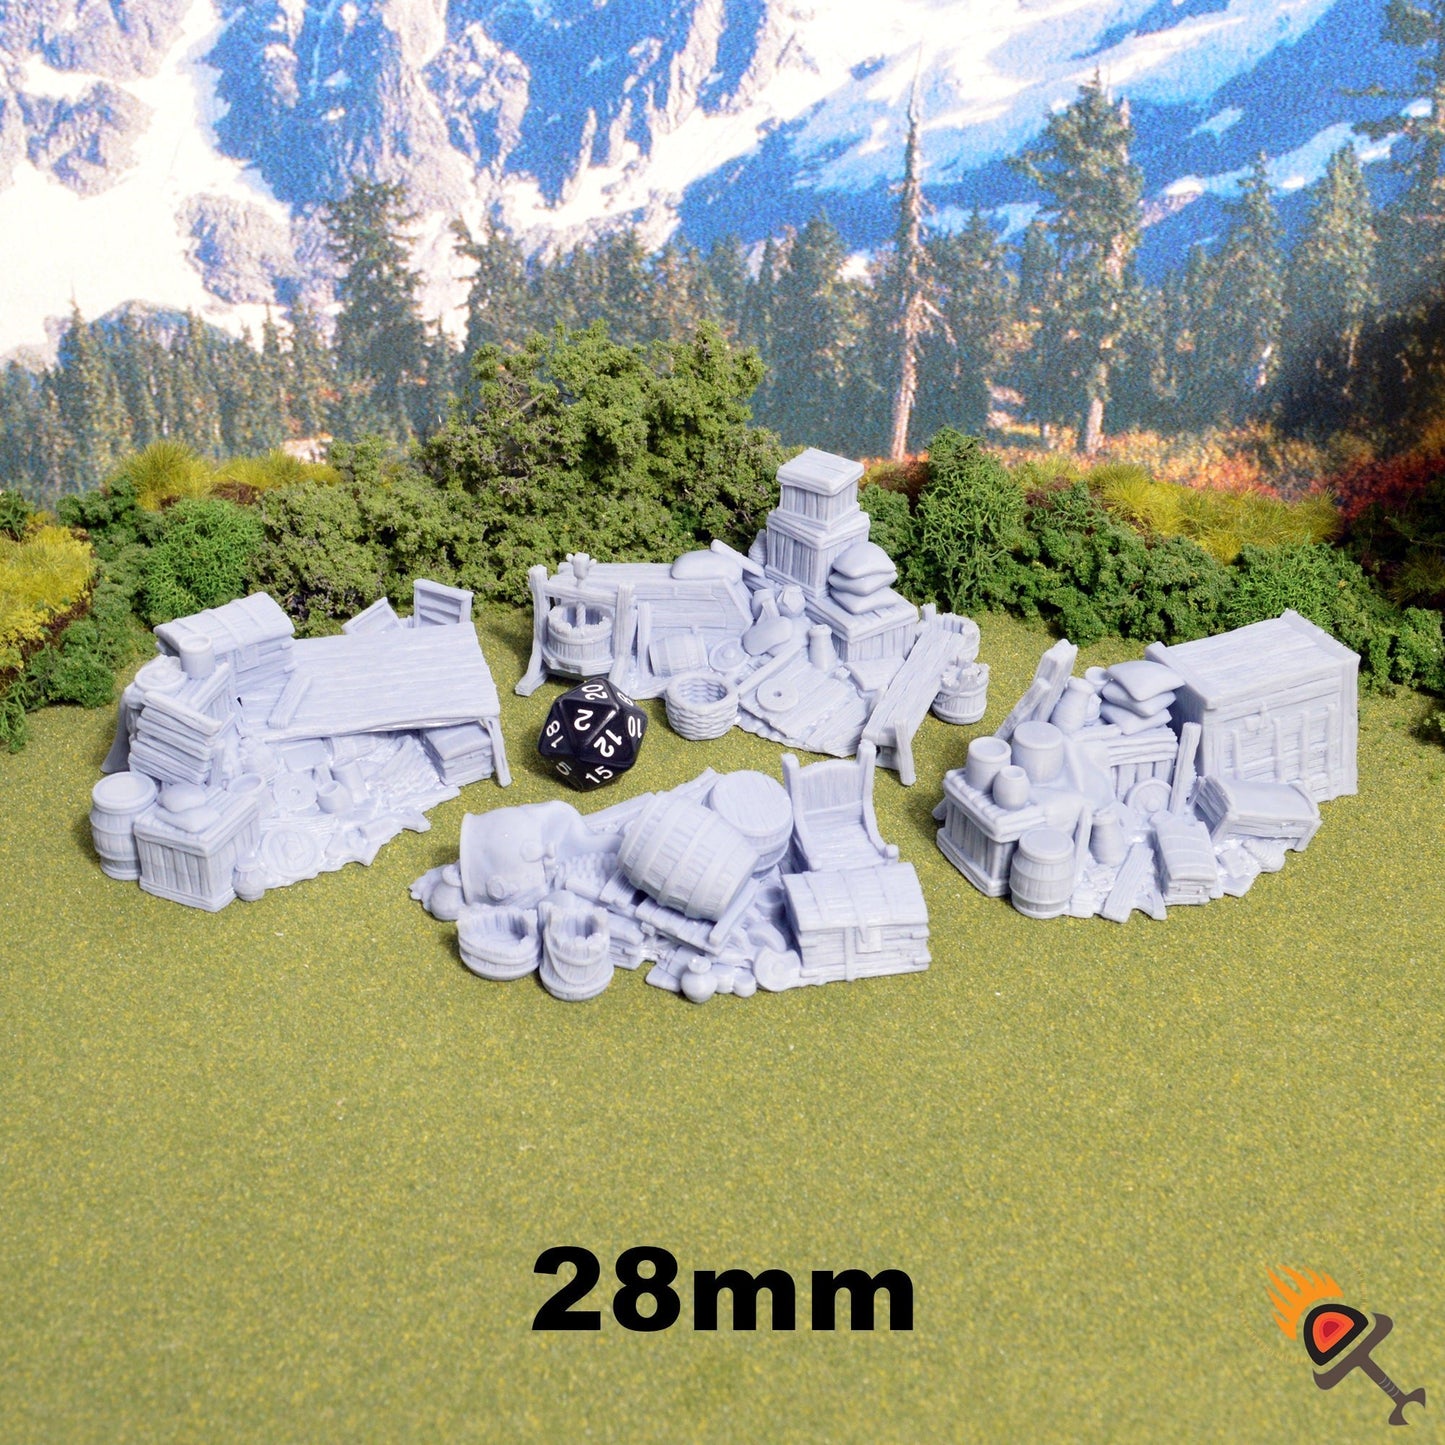 Miniature Barricades 15mm 28mm for D&D Terrain, DnD Pathfinder Wargame, Diorama, Hagglethorn Hollow, Hoard Piles